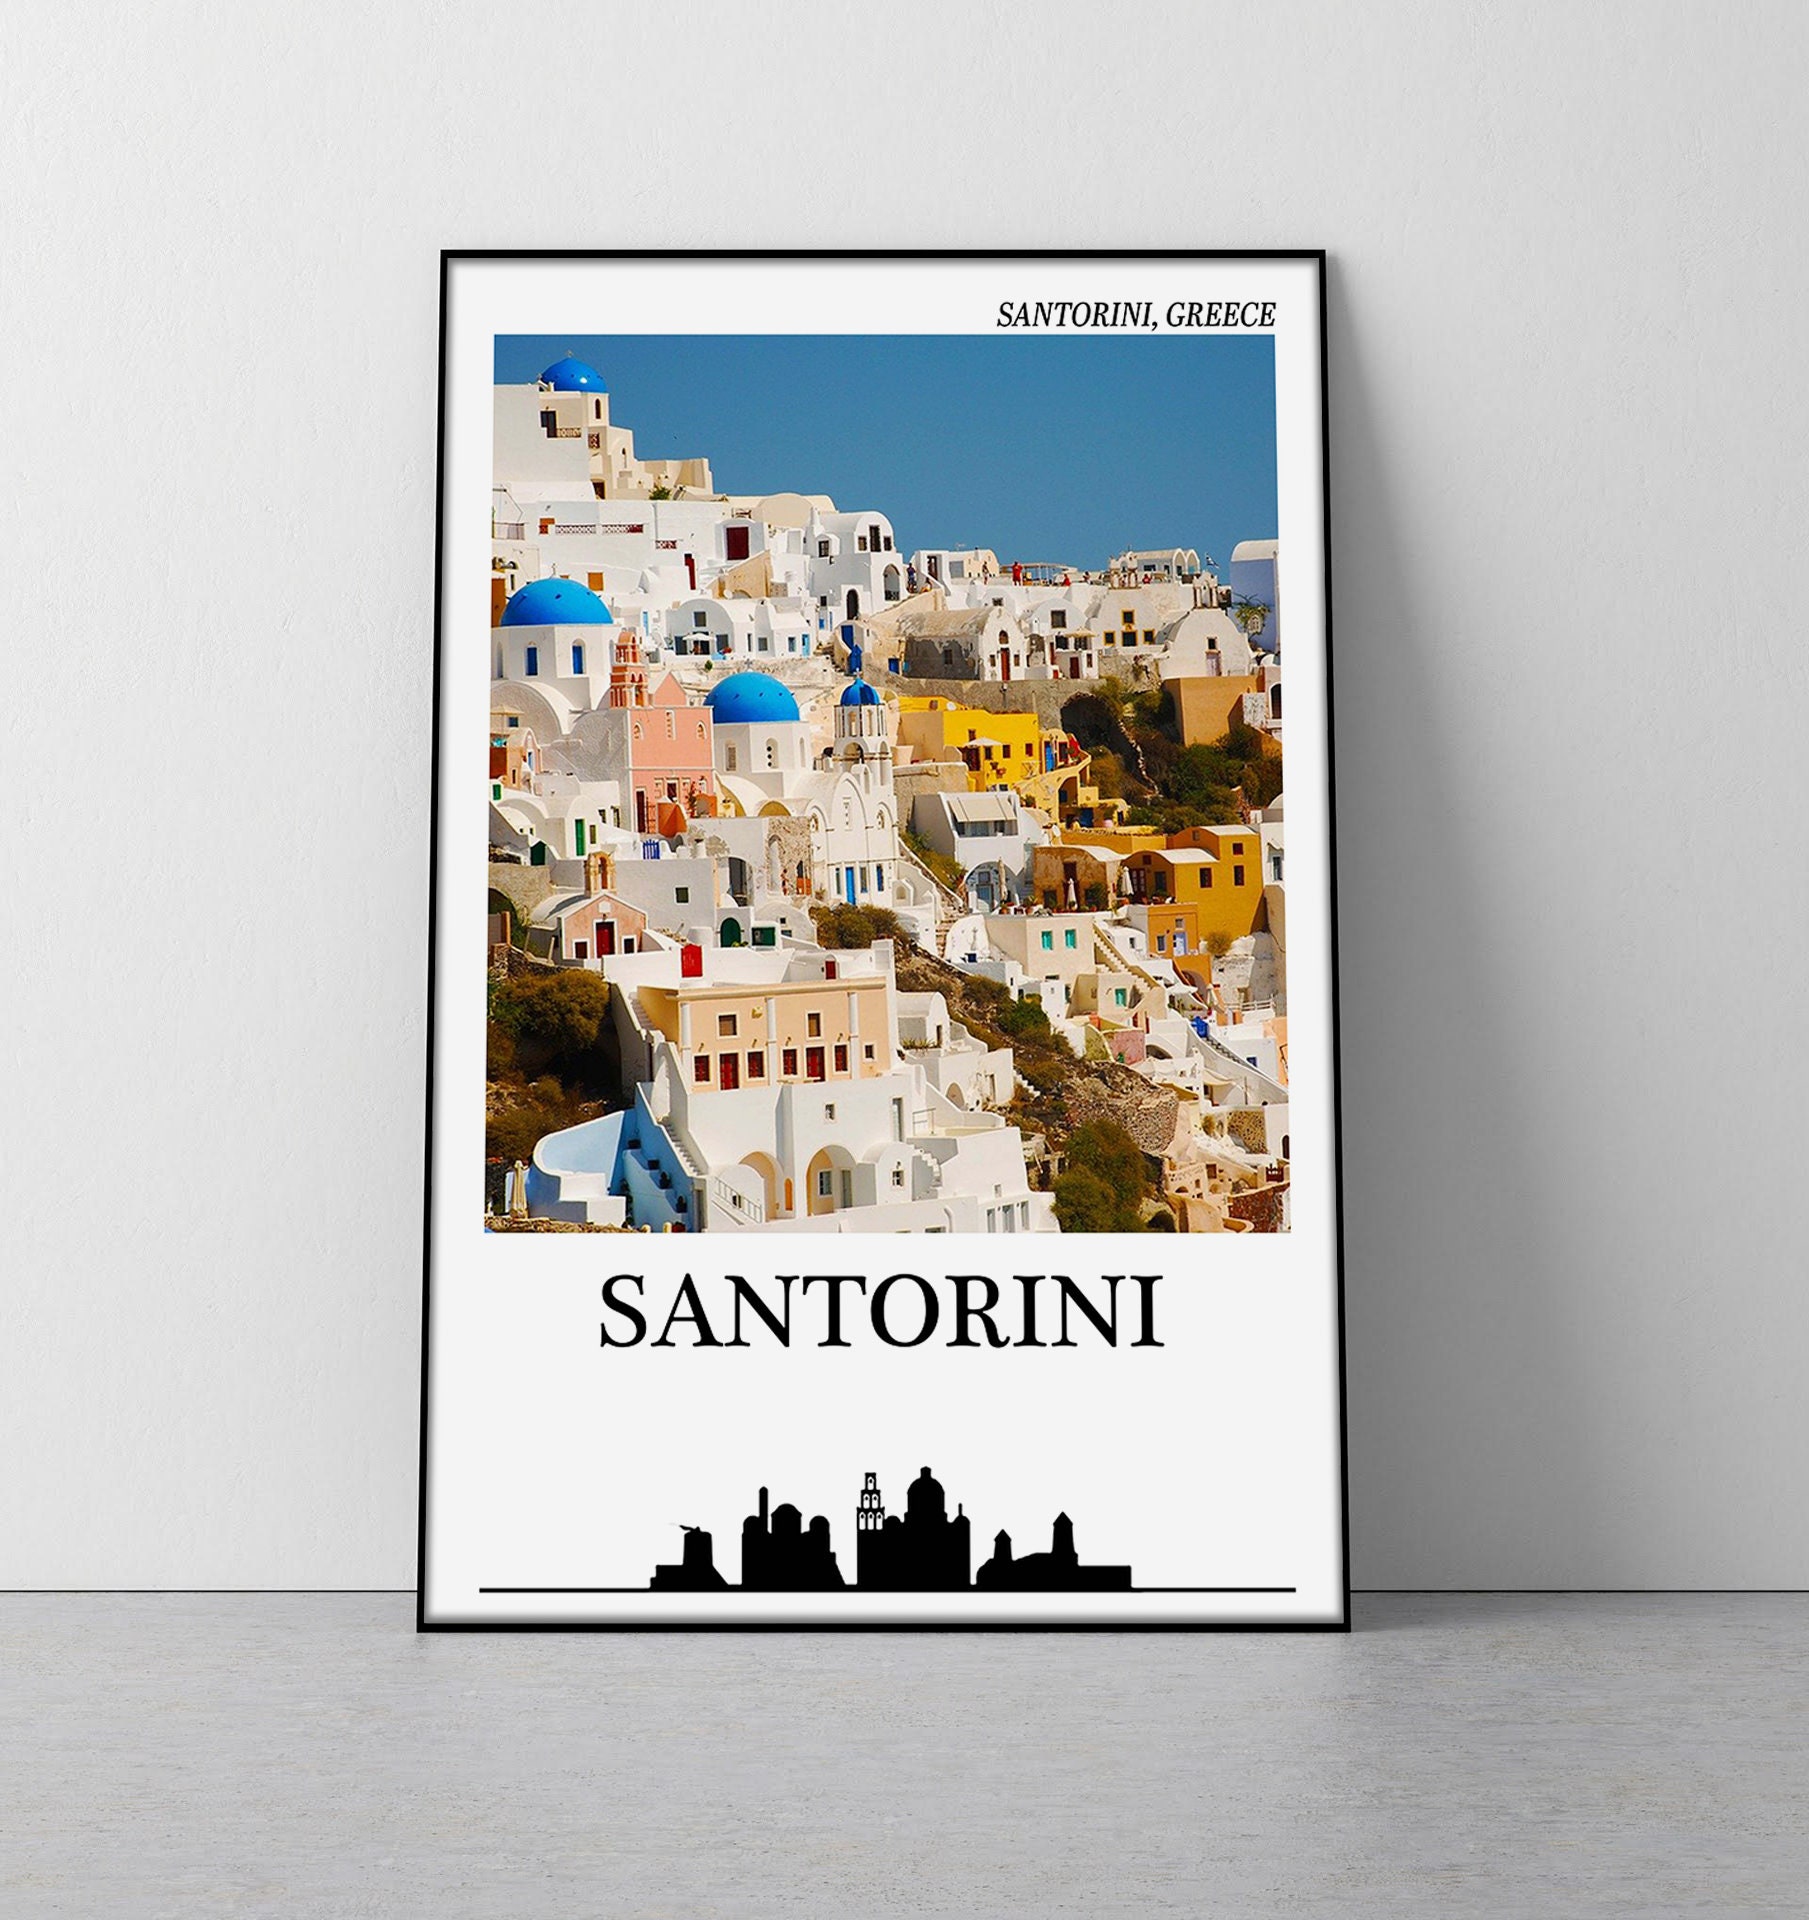 Santori Greece Art Poster Size A3 Seaside Landscape Poster Gift #15543 A3 